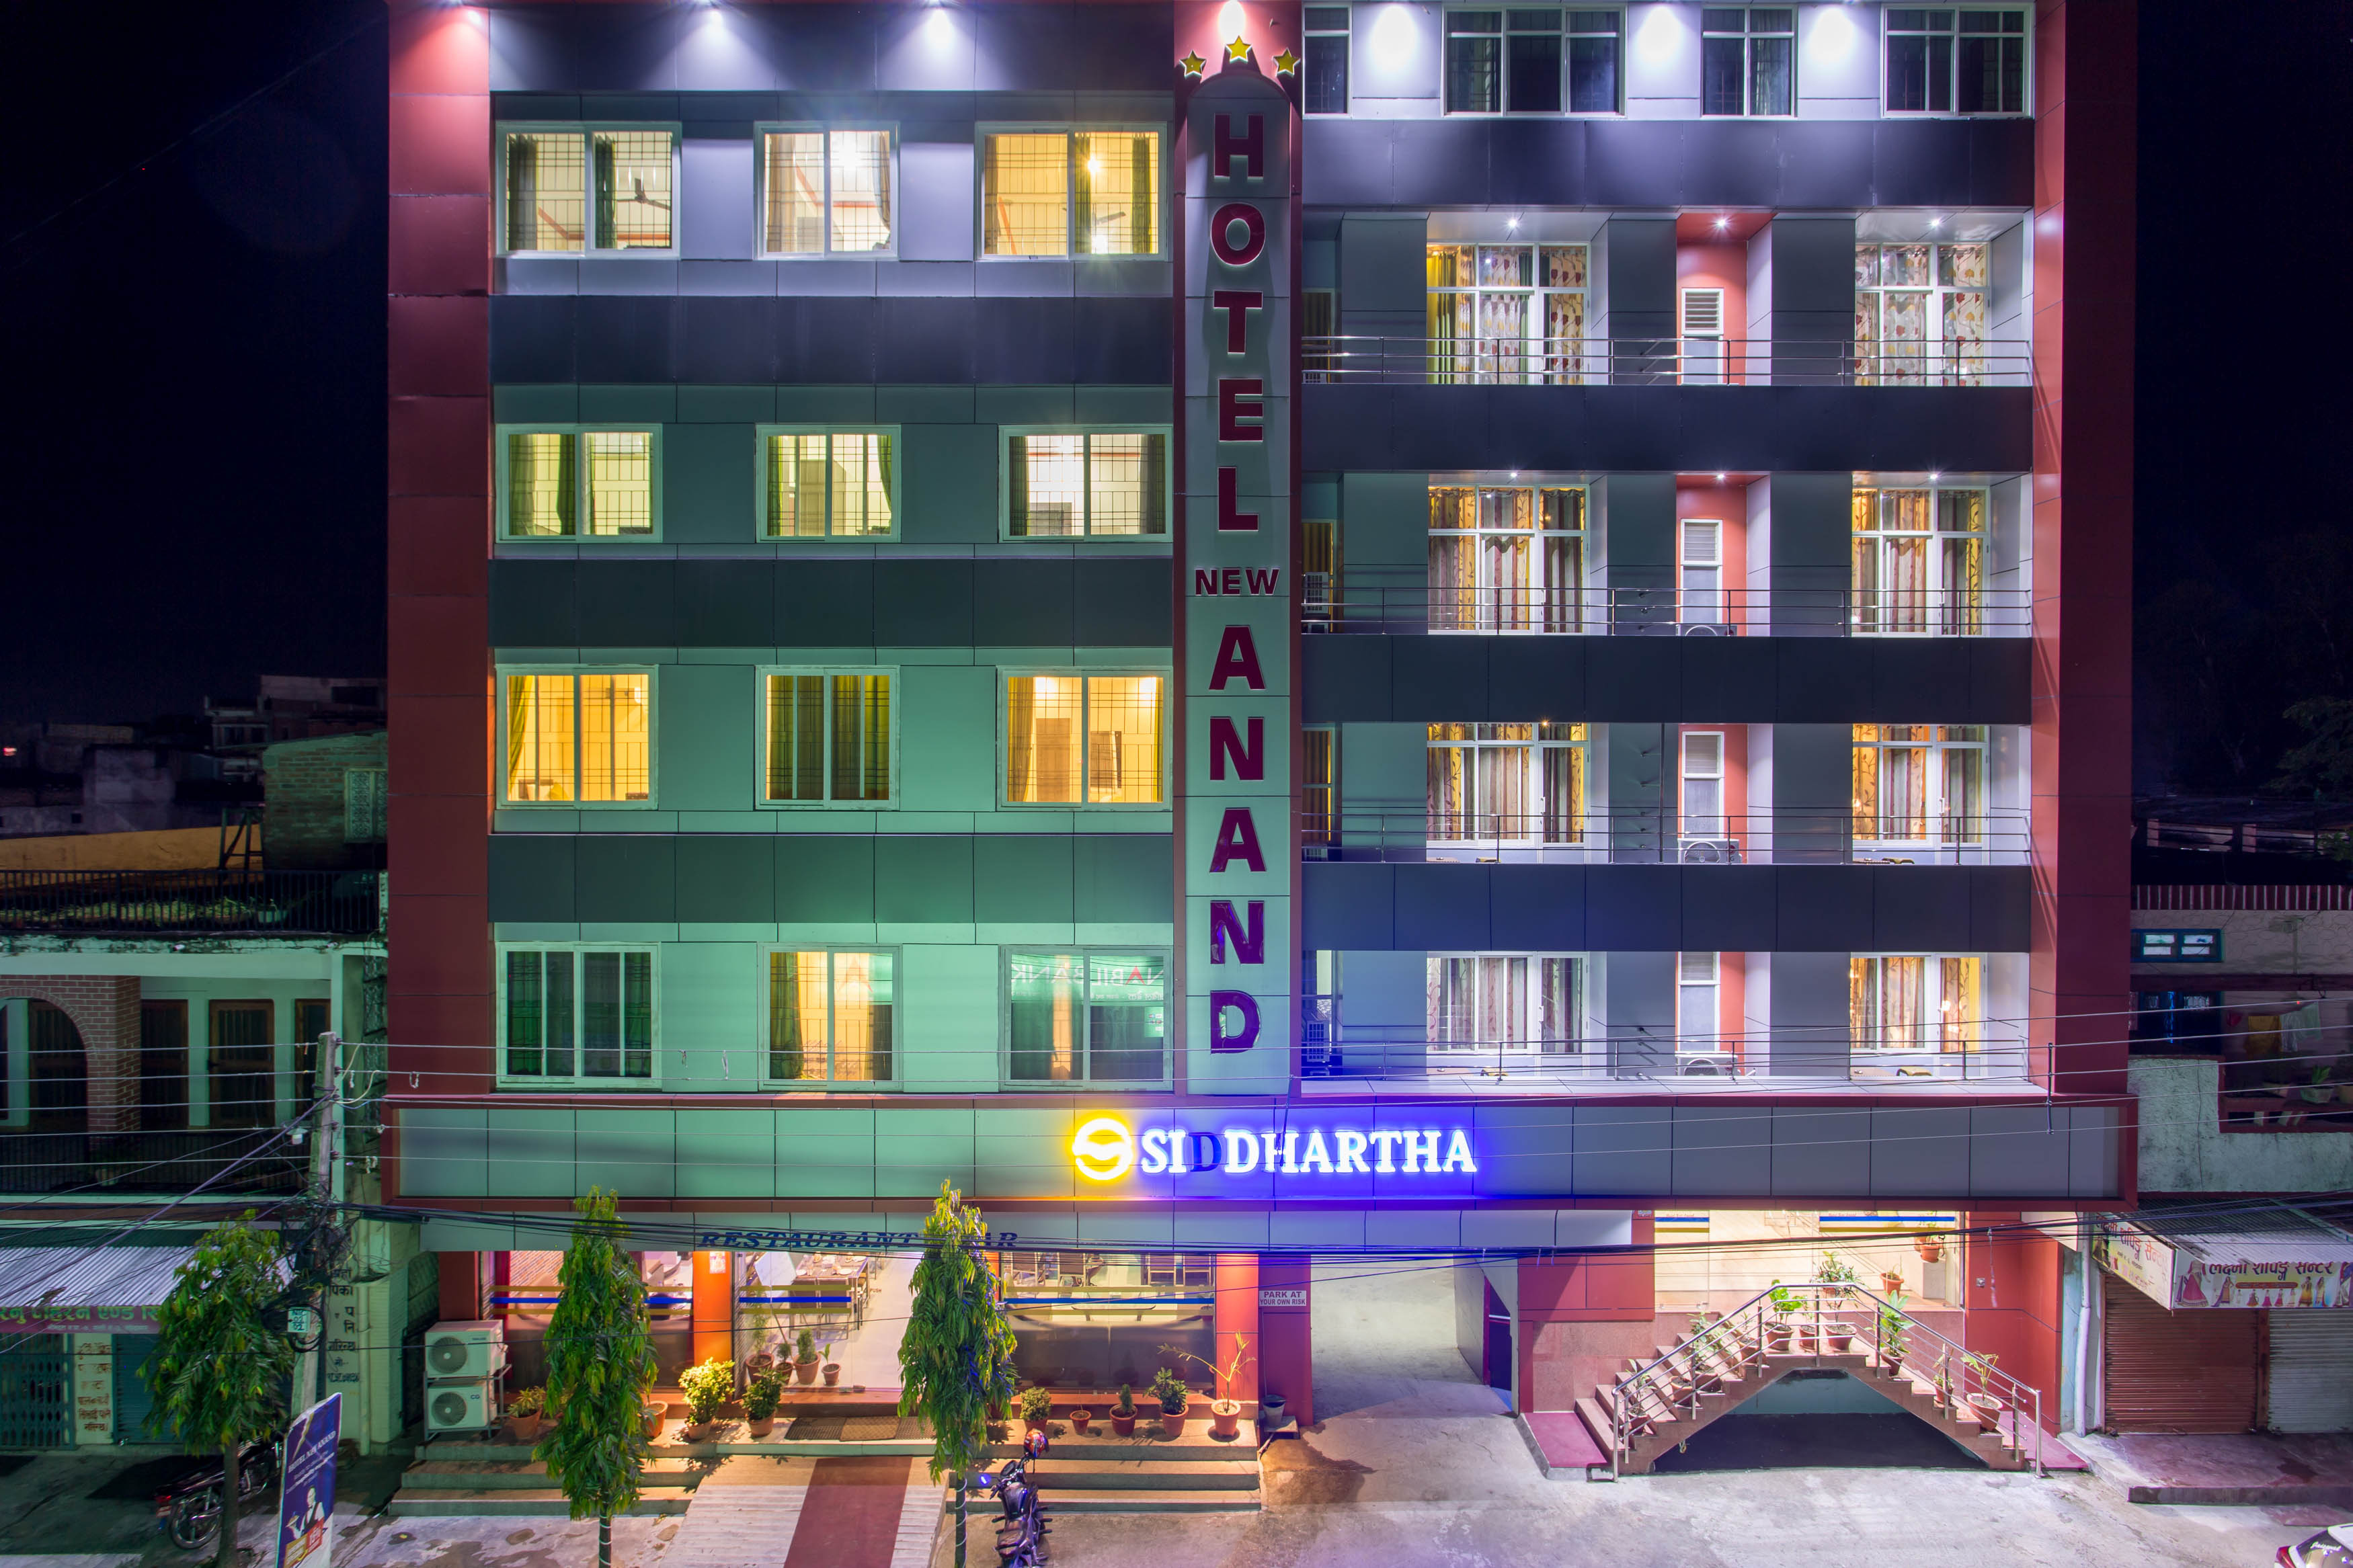  Siddhartha Hotel New Anand